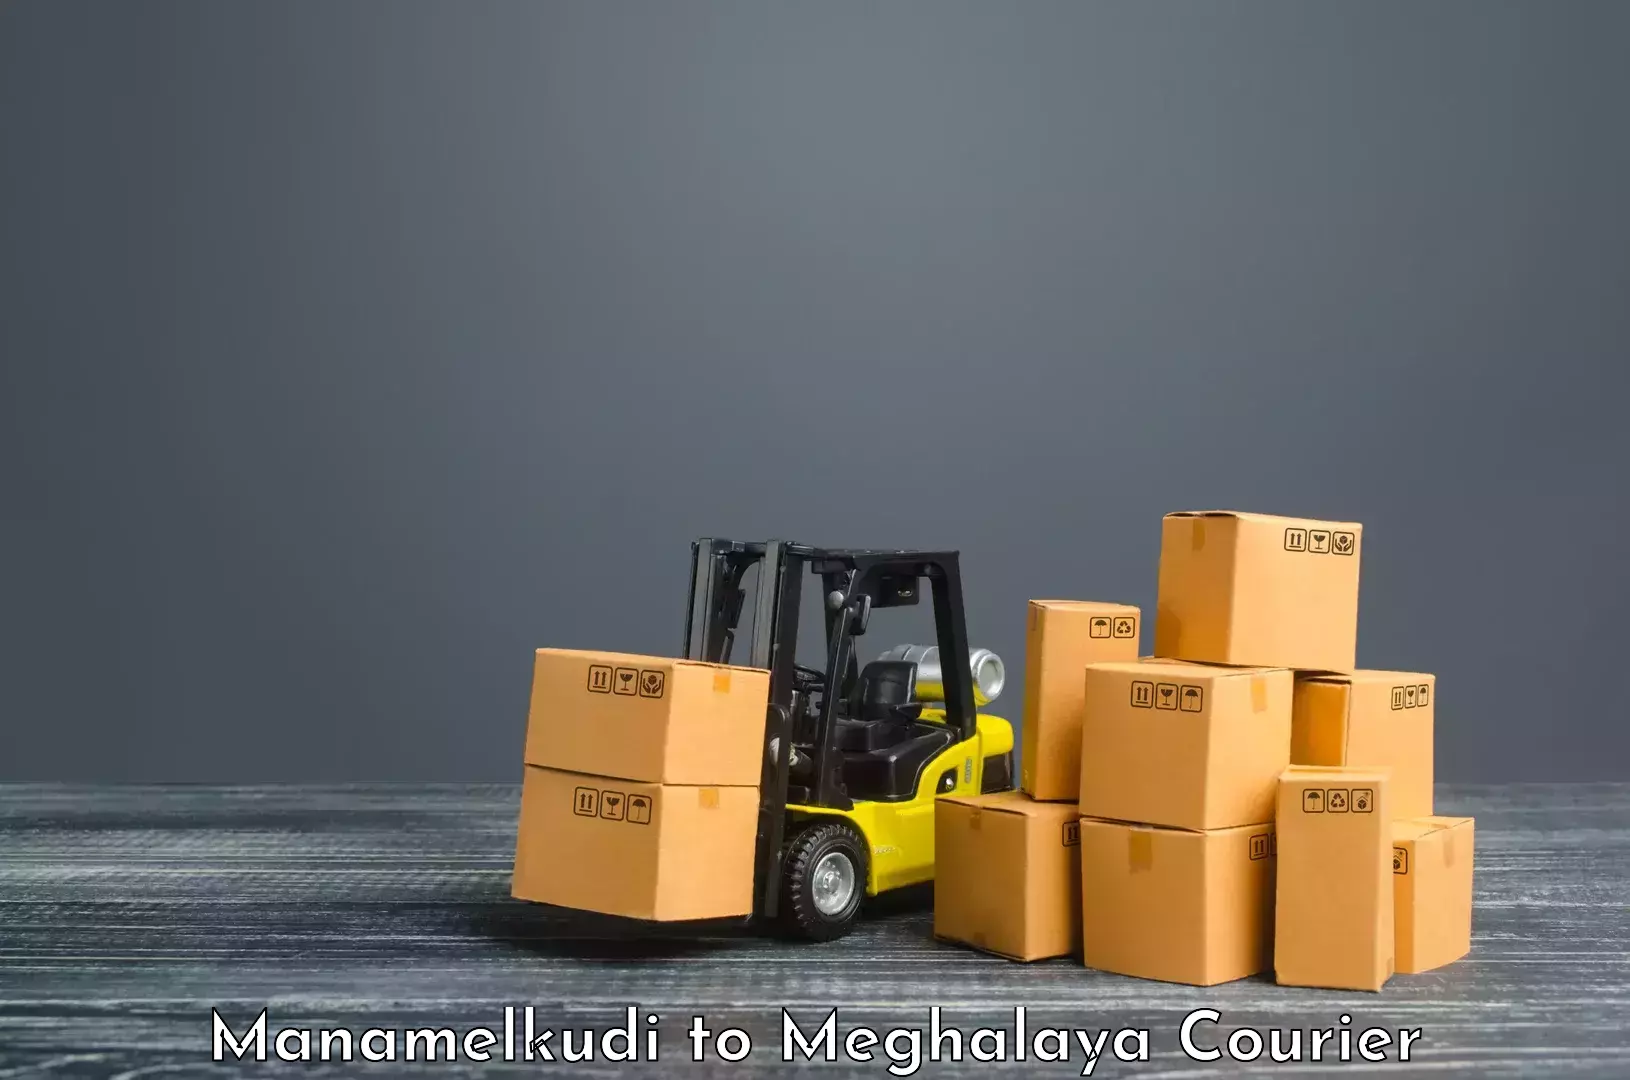 High-speed parcel service Manamelkudi to Marshillong